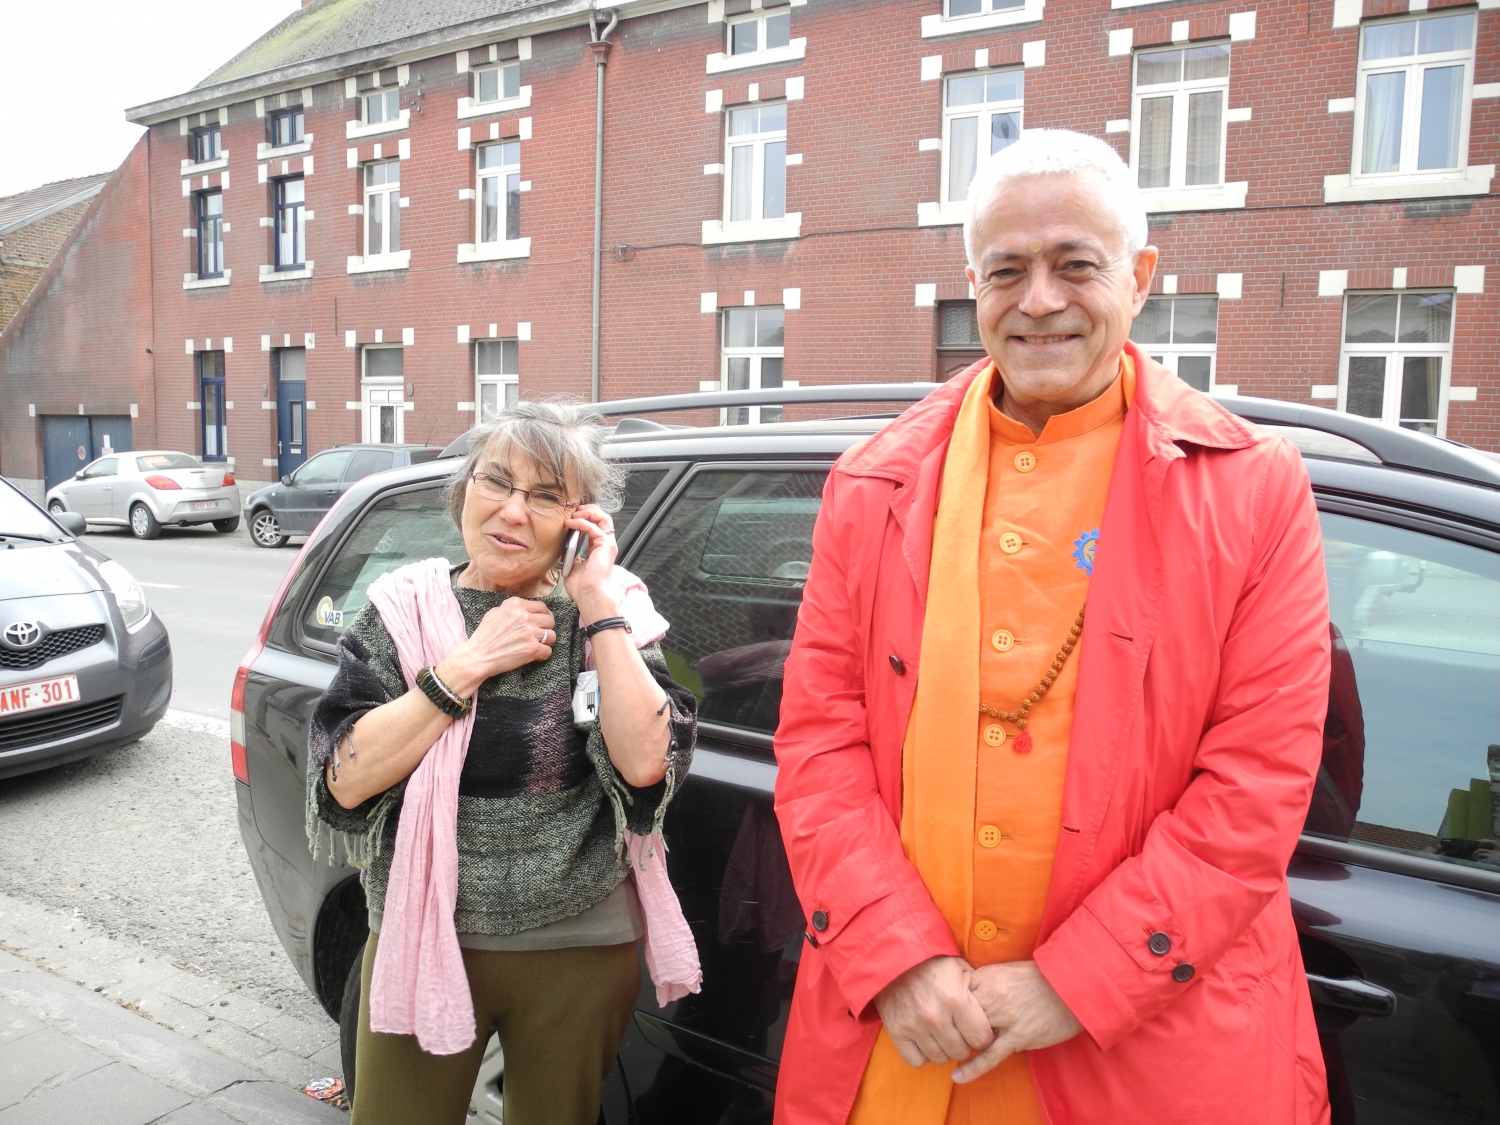 Rencontre de H.H. Jagat Guru Amrta Sūryānanda Mahā Rāja avec Maître Thierry Van Brabant - Centre Samtosha, Jodoigne, Belgique - 2012, mars